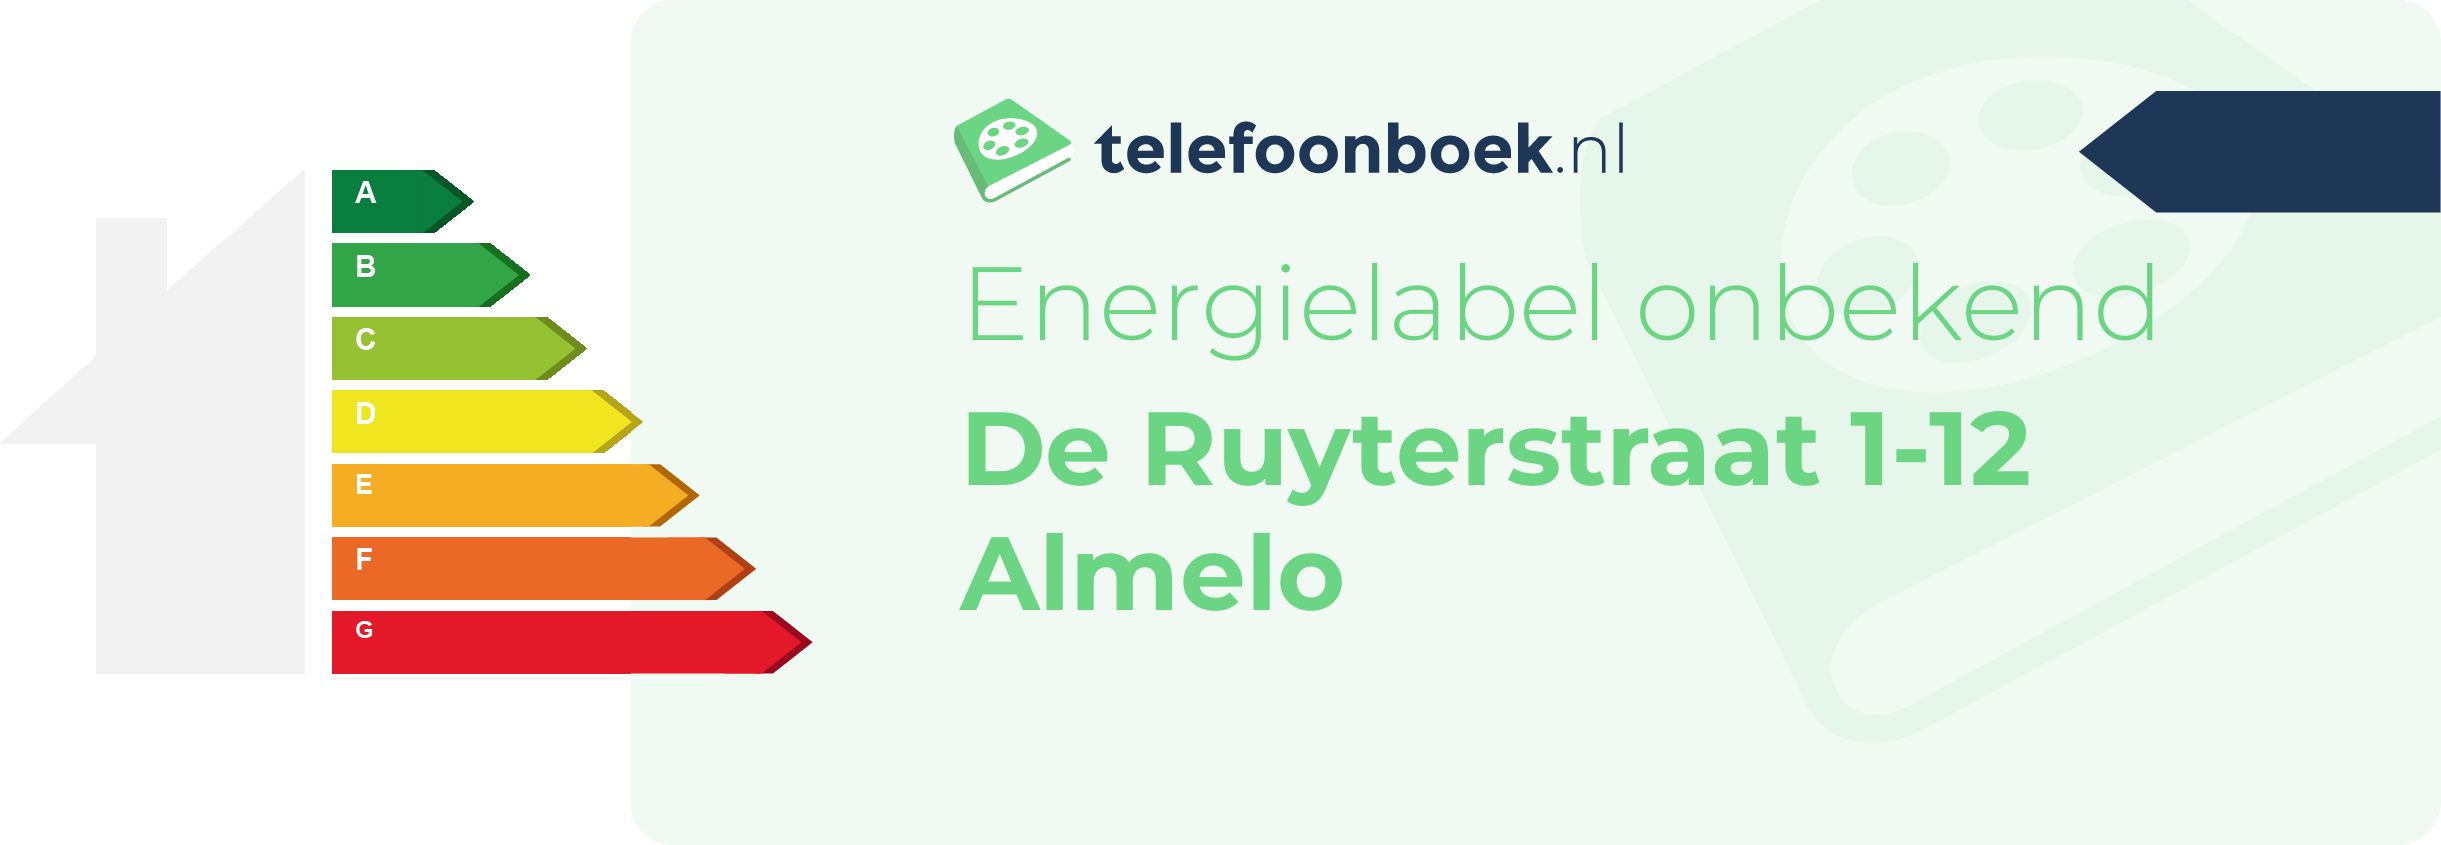 Energielabel De Ruyterstraat 1-12 Almelo